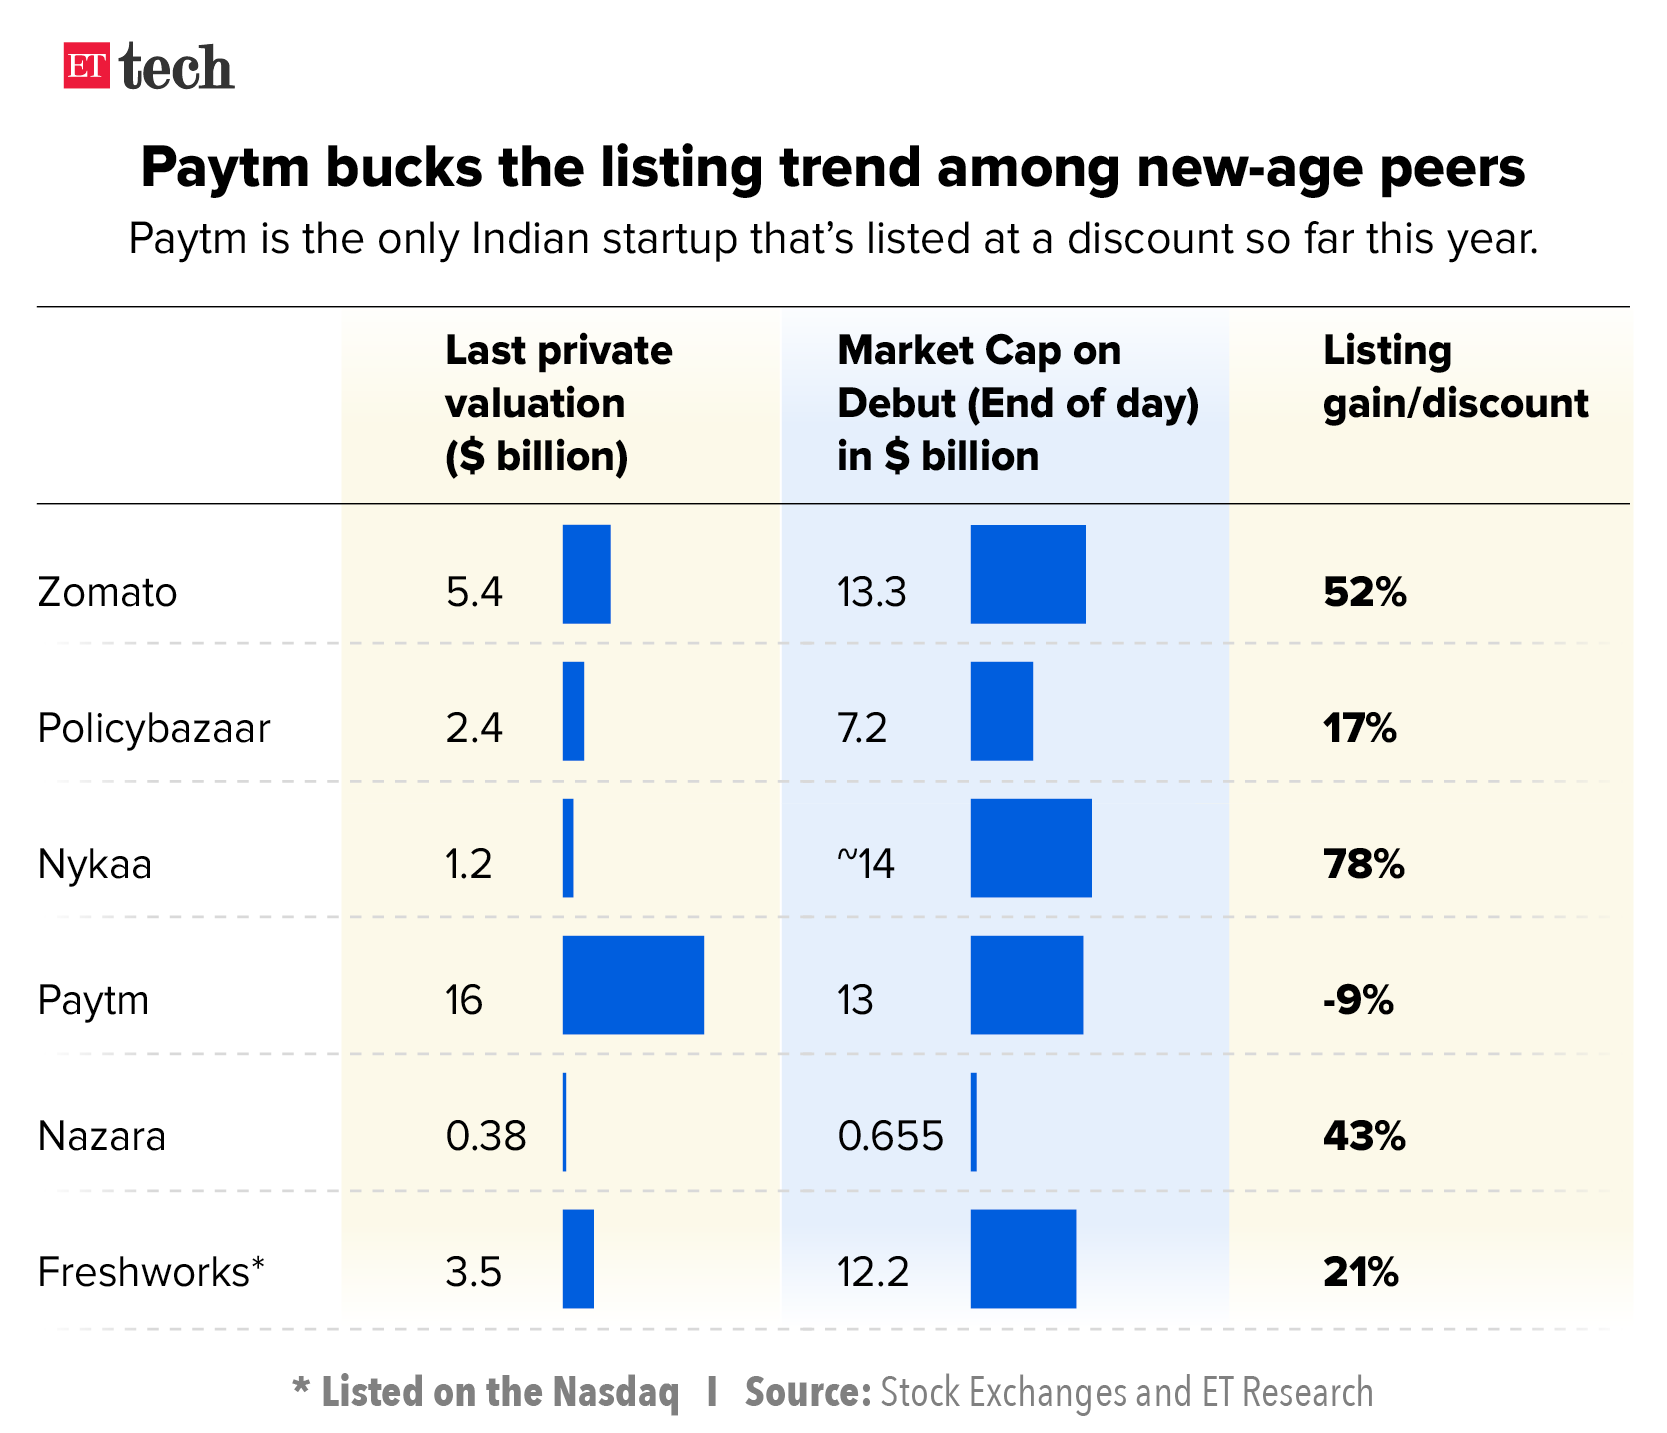 Paytm bucks the listing trend